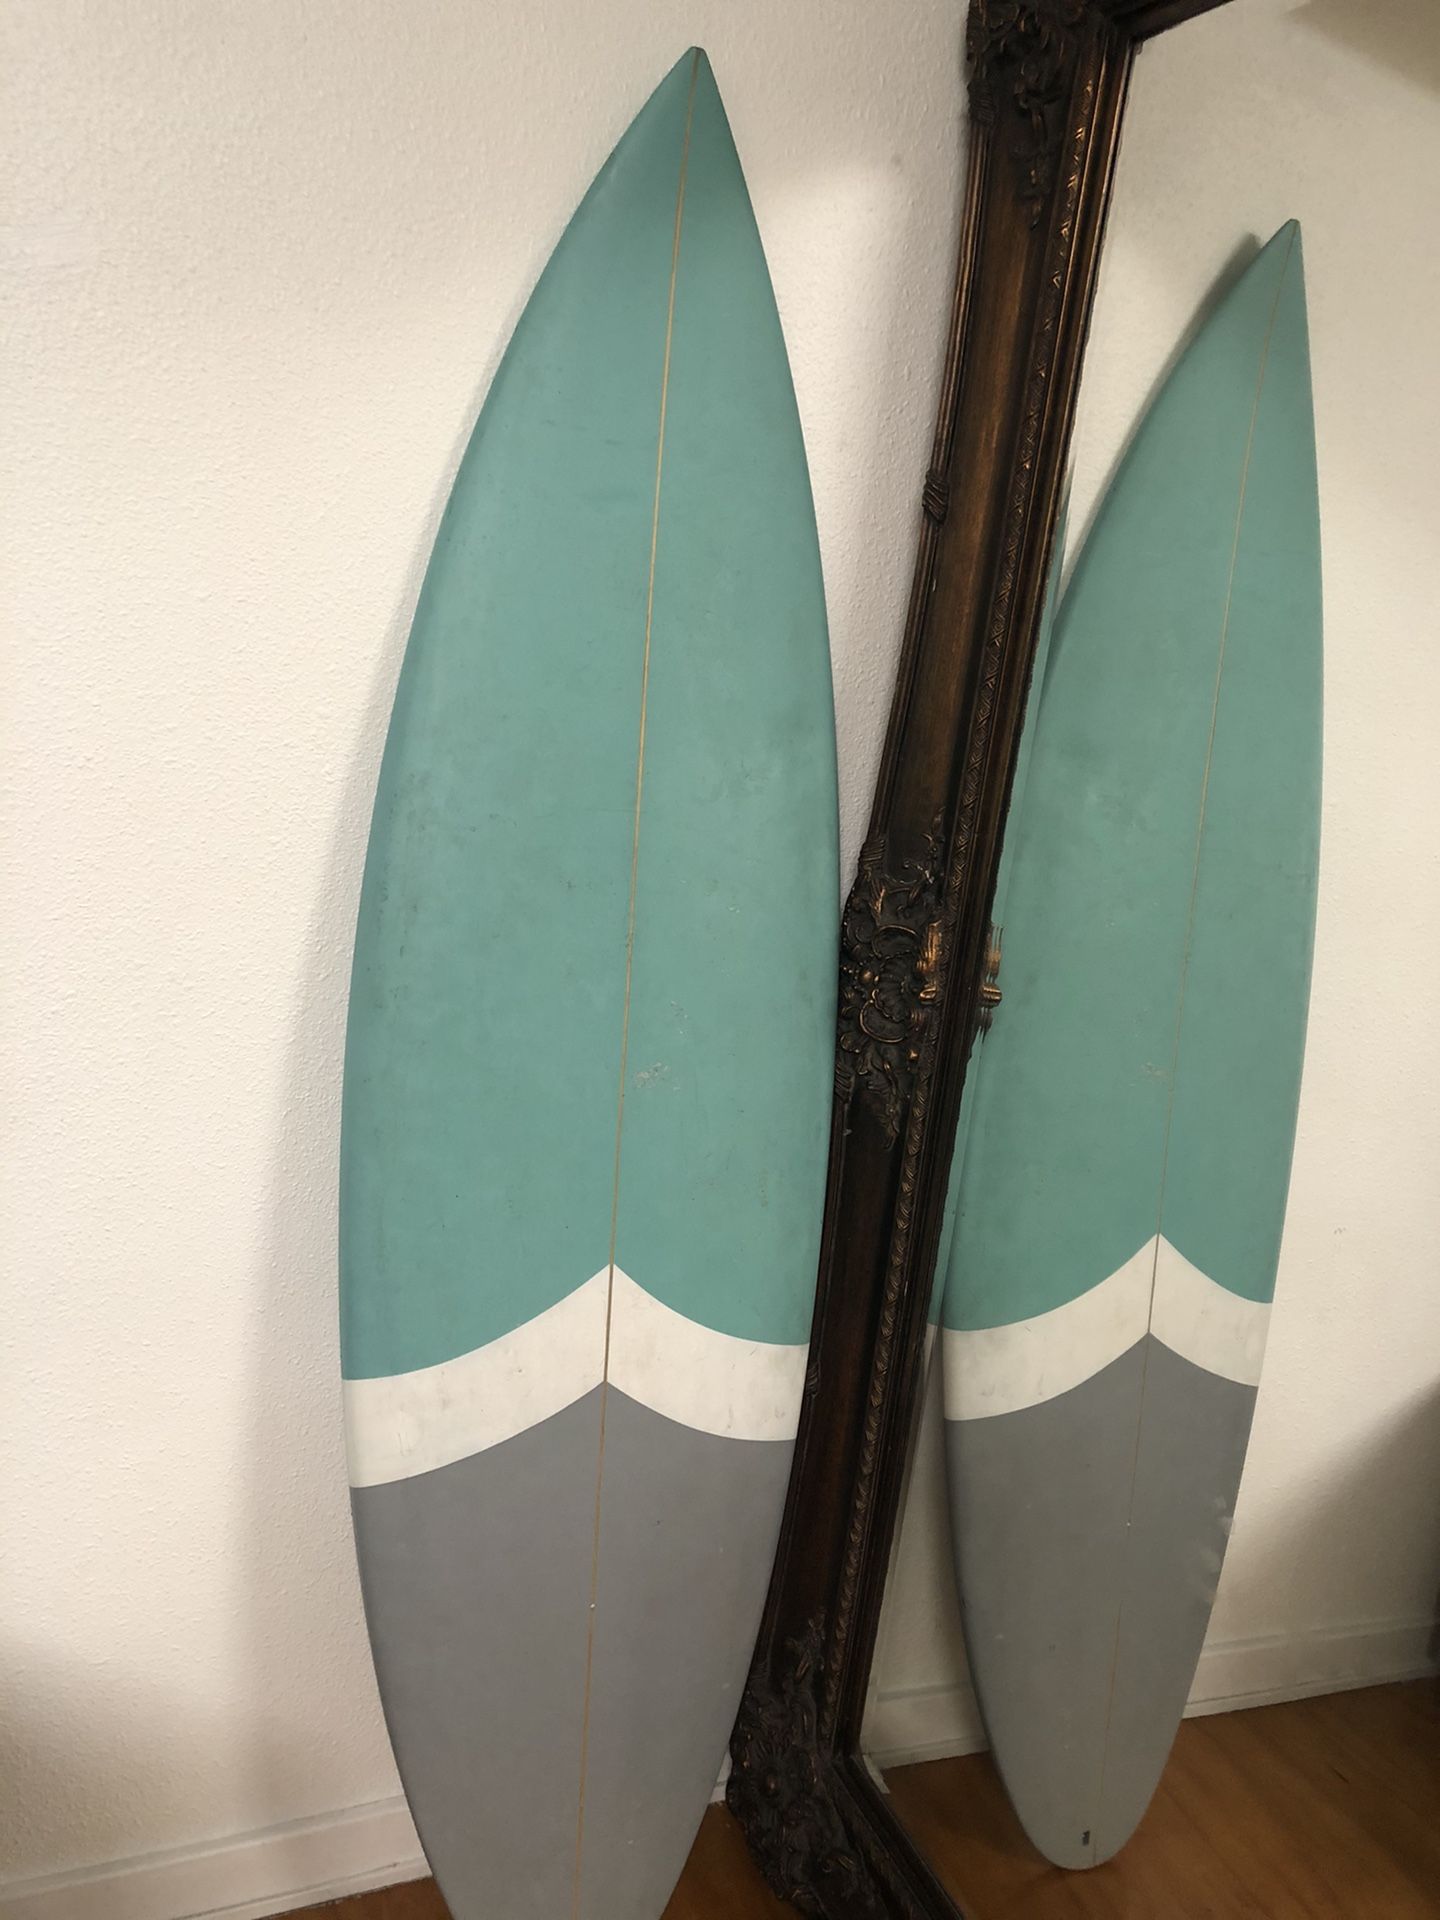 Bali 6’6 surfboard 200 fresh custom paint